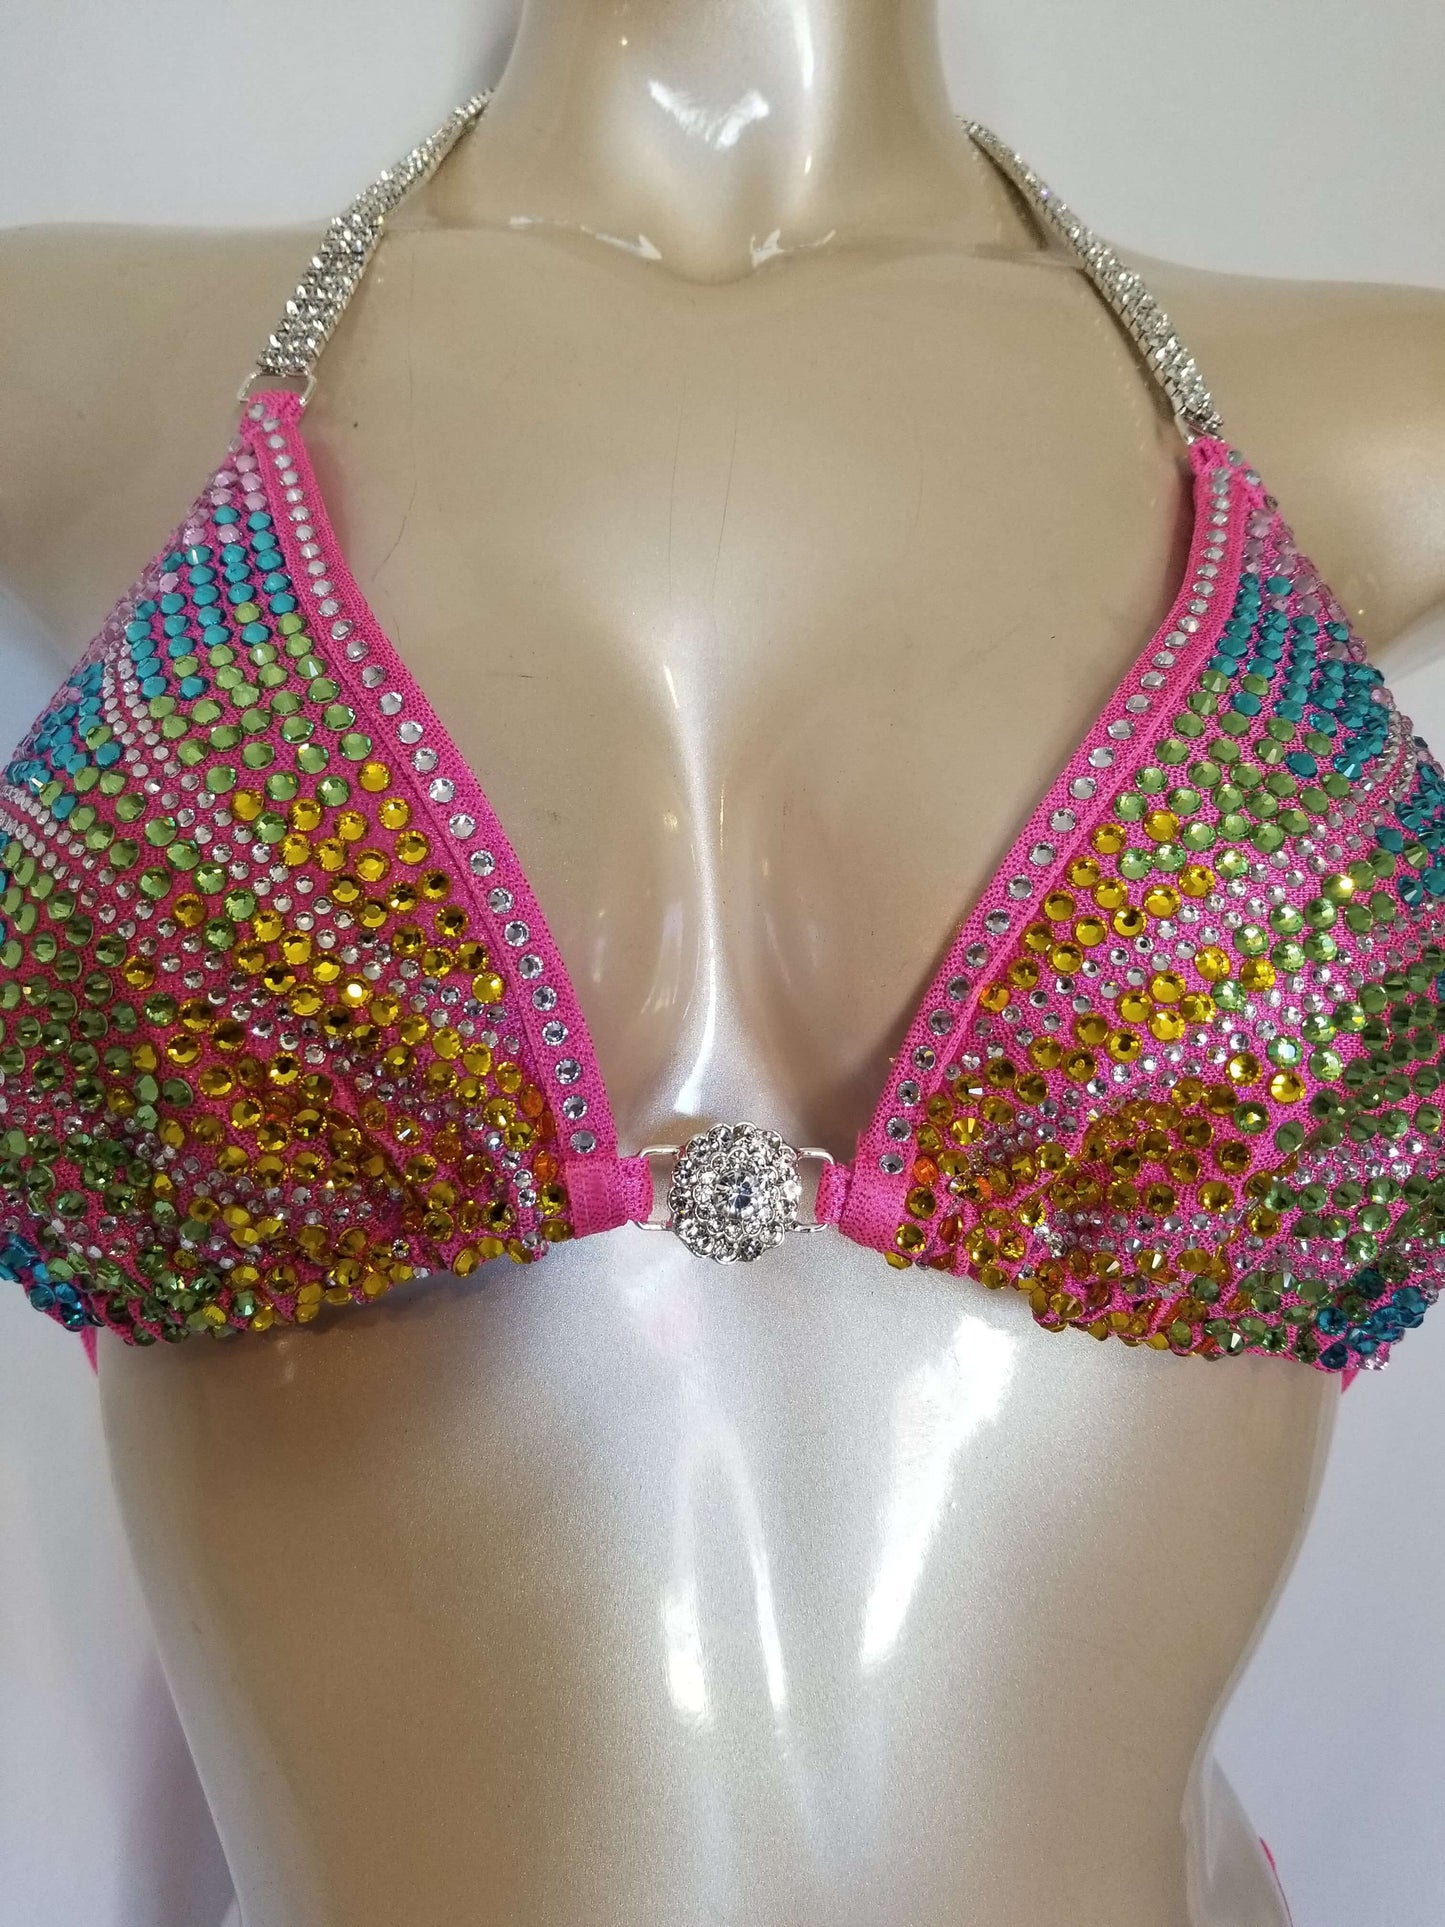 Pink bikini with rainbow butterfly wing rhinestone design